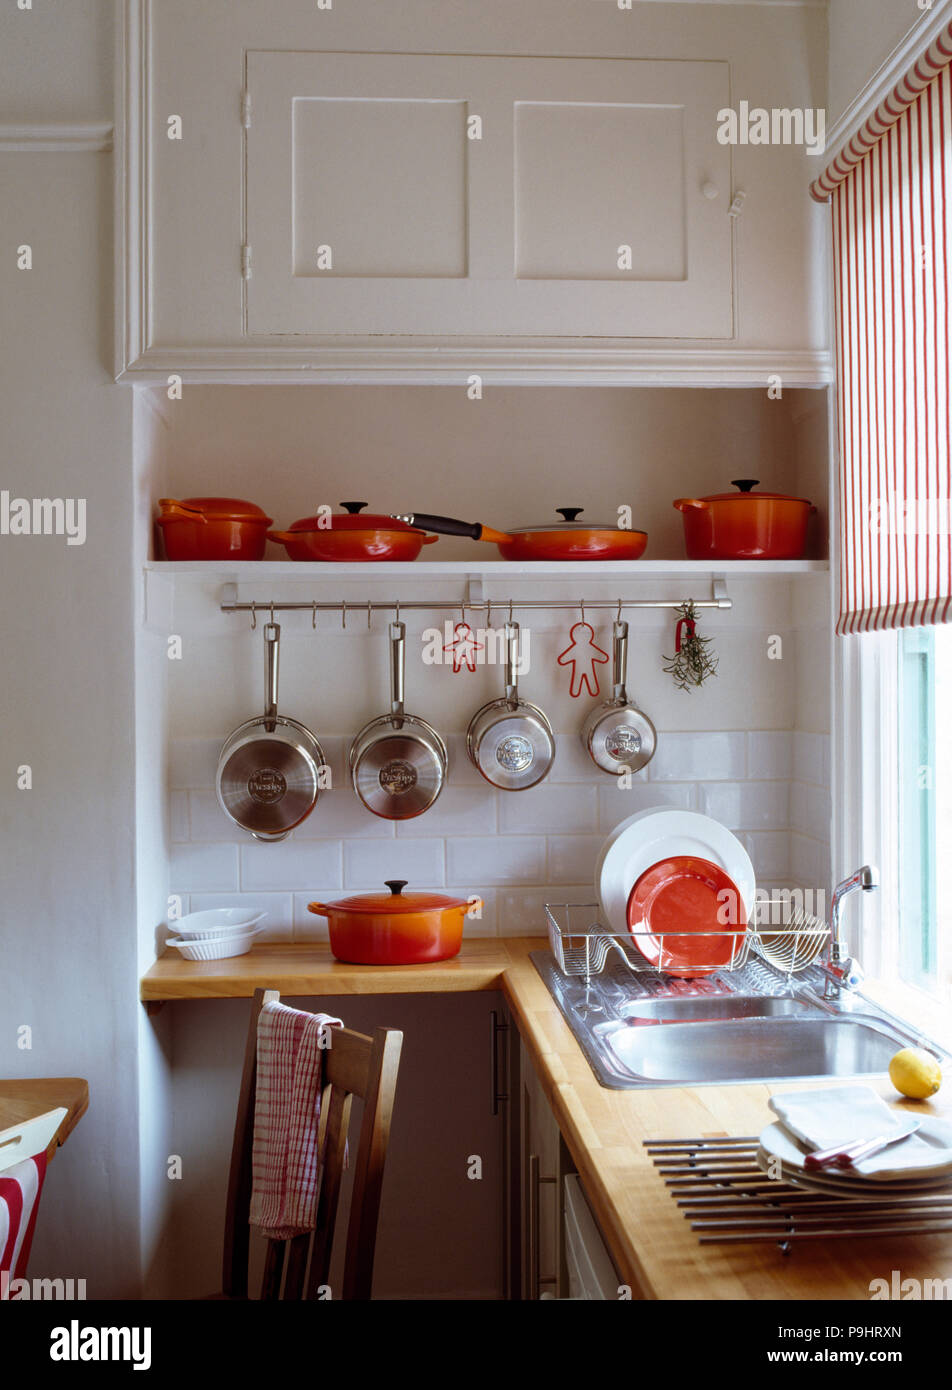 https://c8.alamy.com/comp/P9HRXN/row-of-orange-le-creuset-pans-on-shelf-above-stainless-steel-pans-on-rack-in-white-kitchen-P9HRXN.jpg